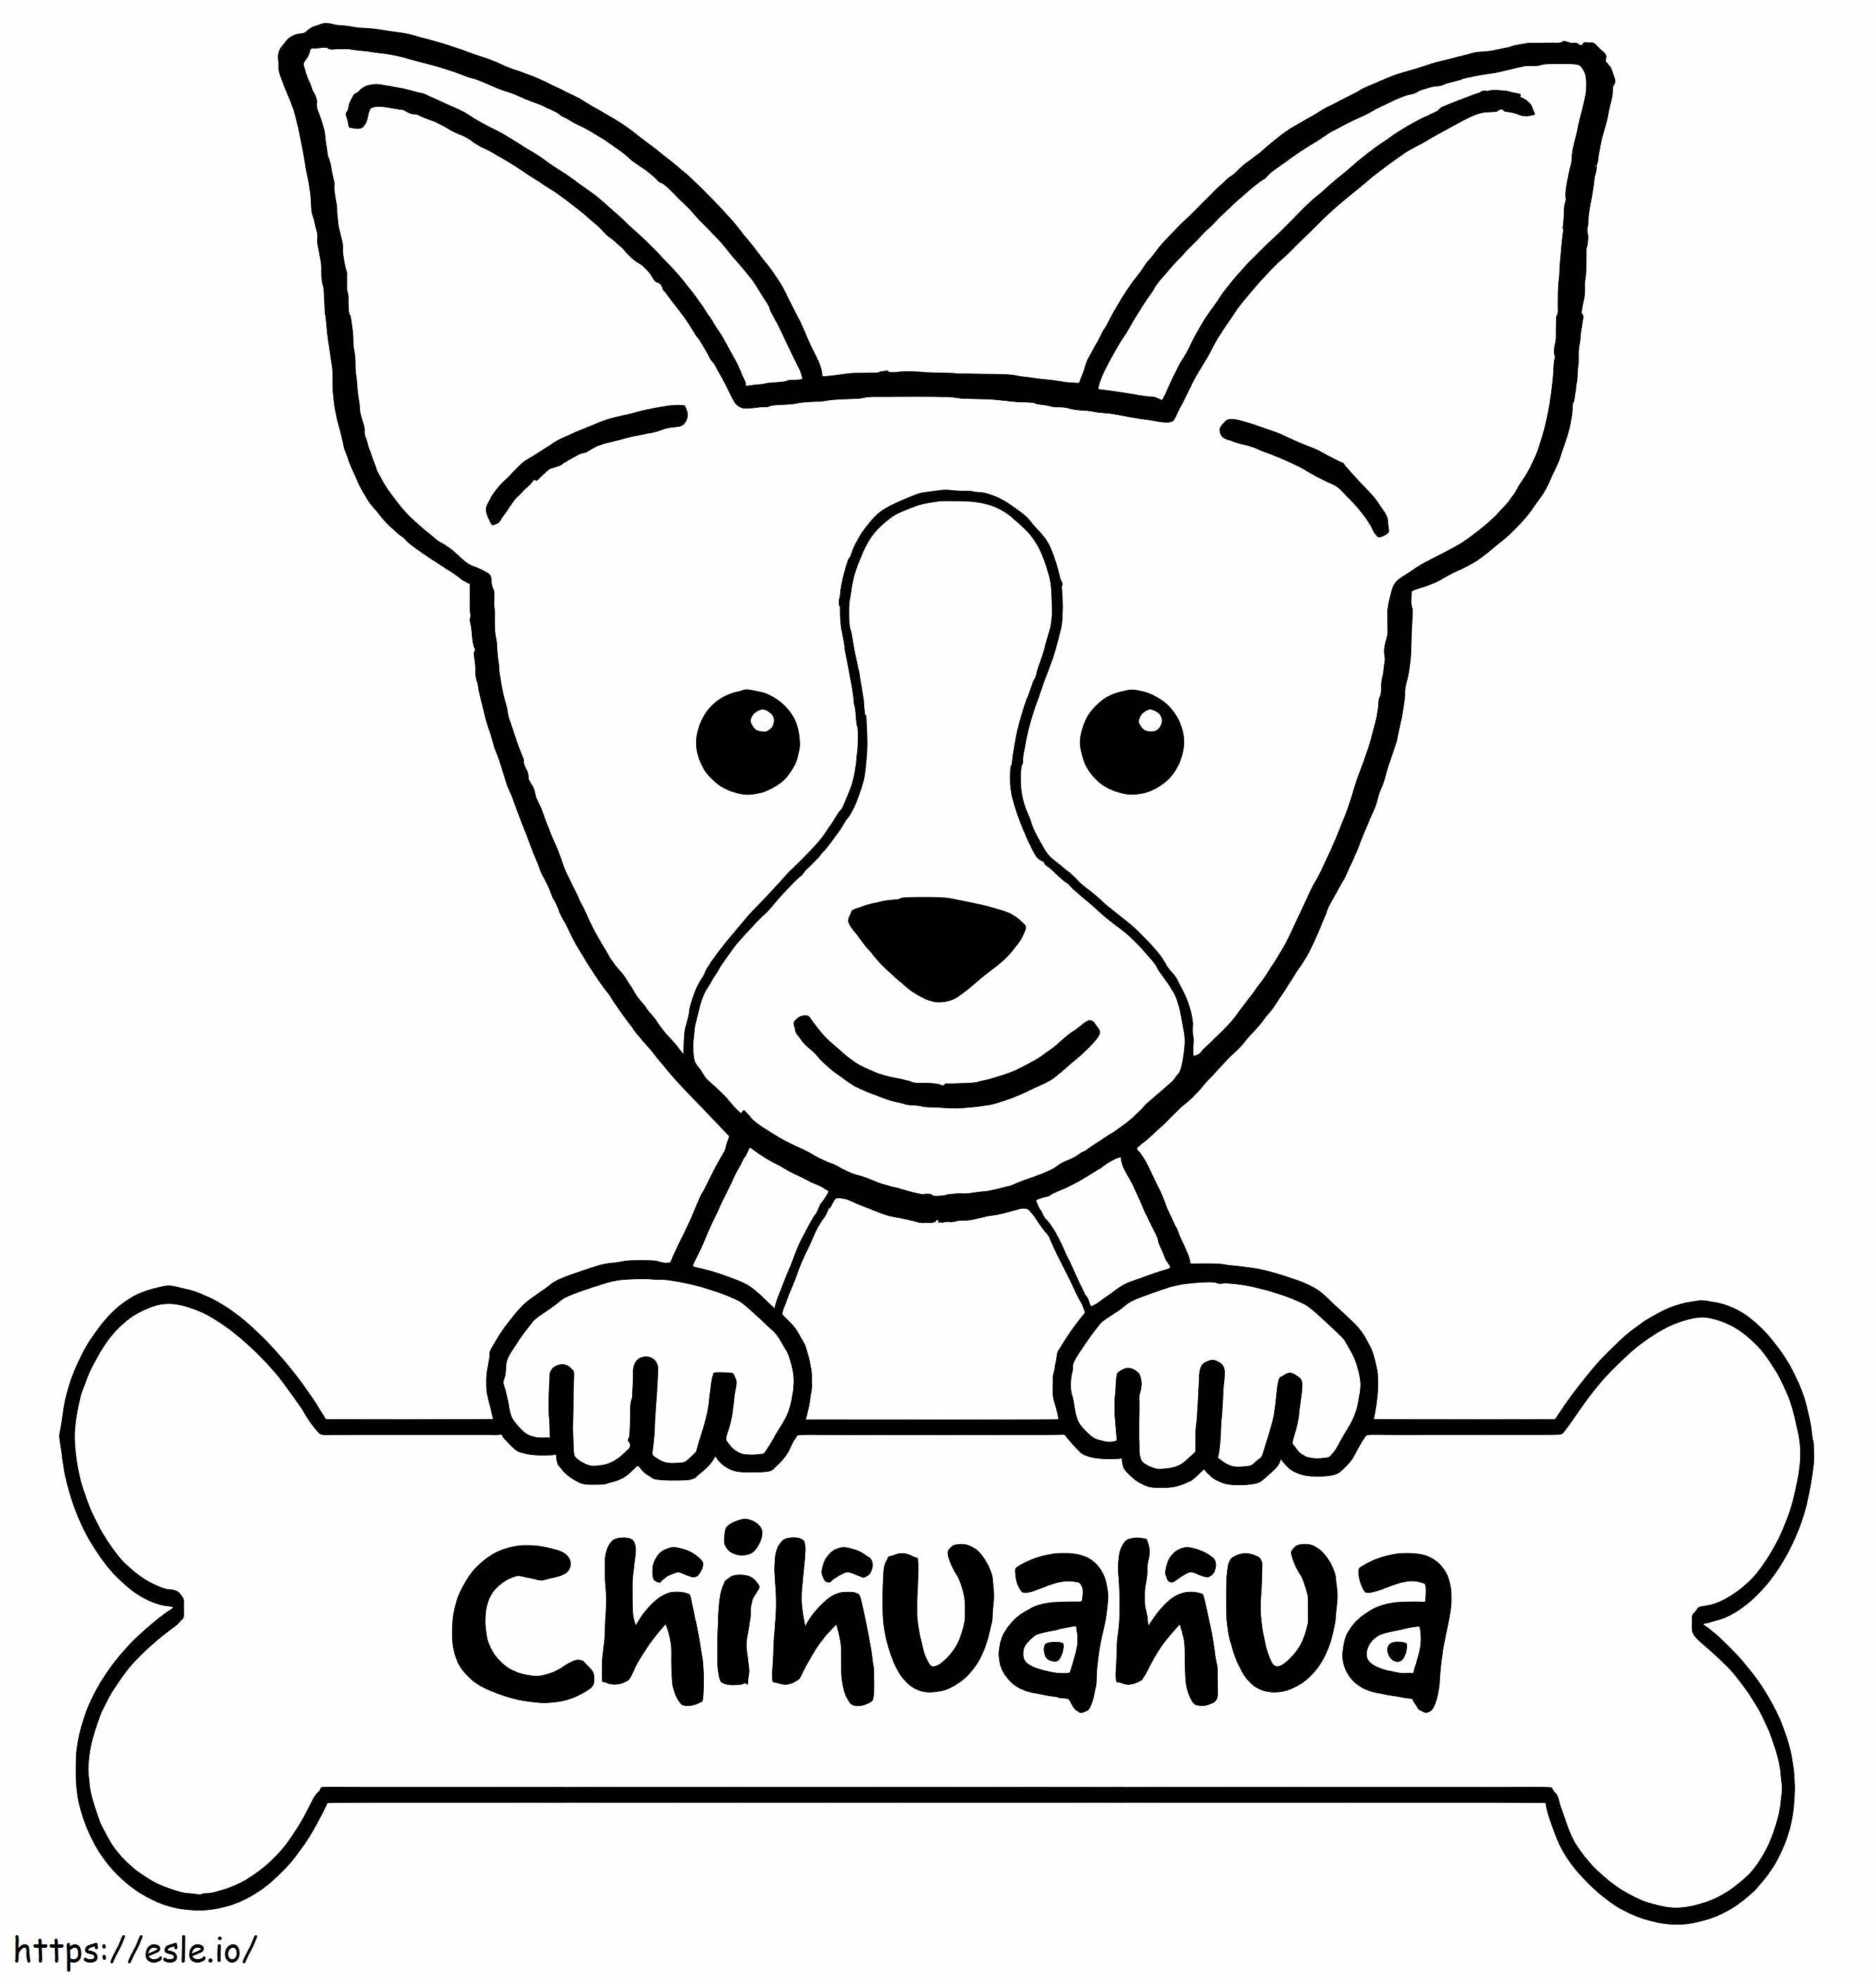 Chihuahua și os de colorat